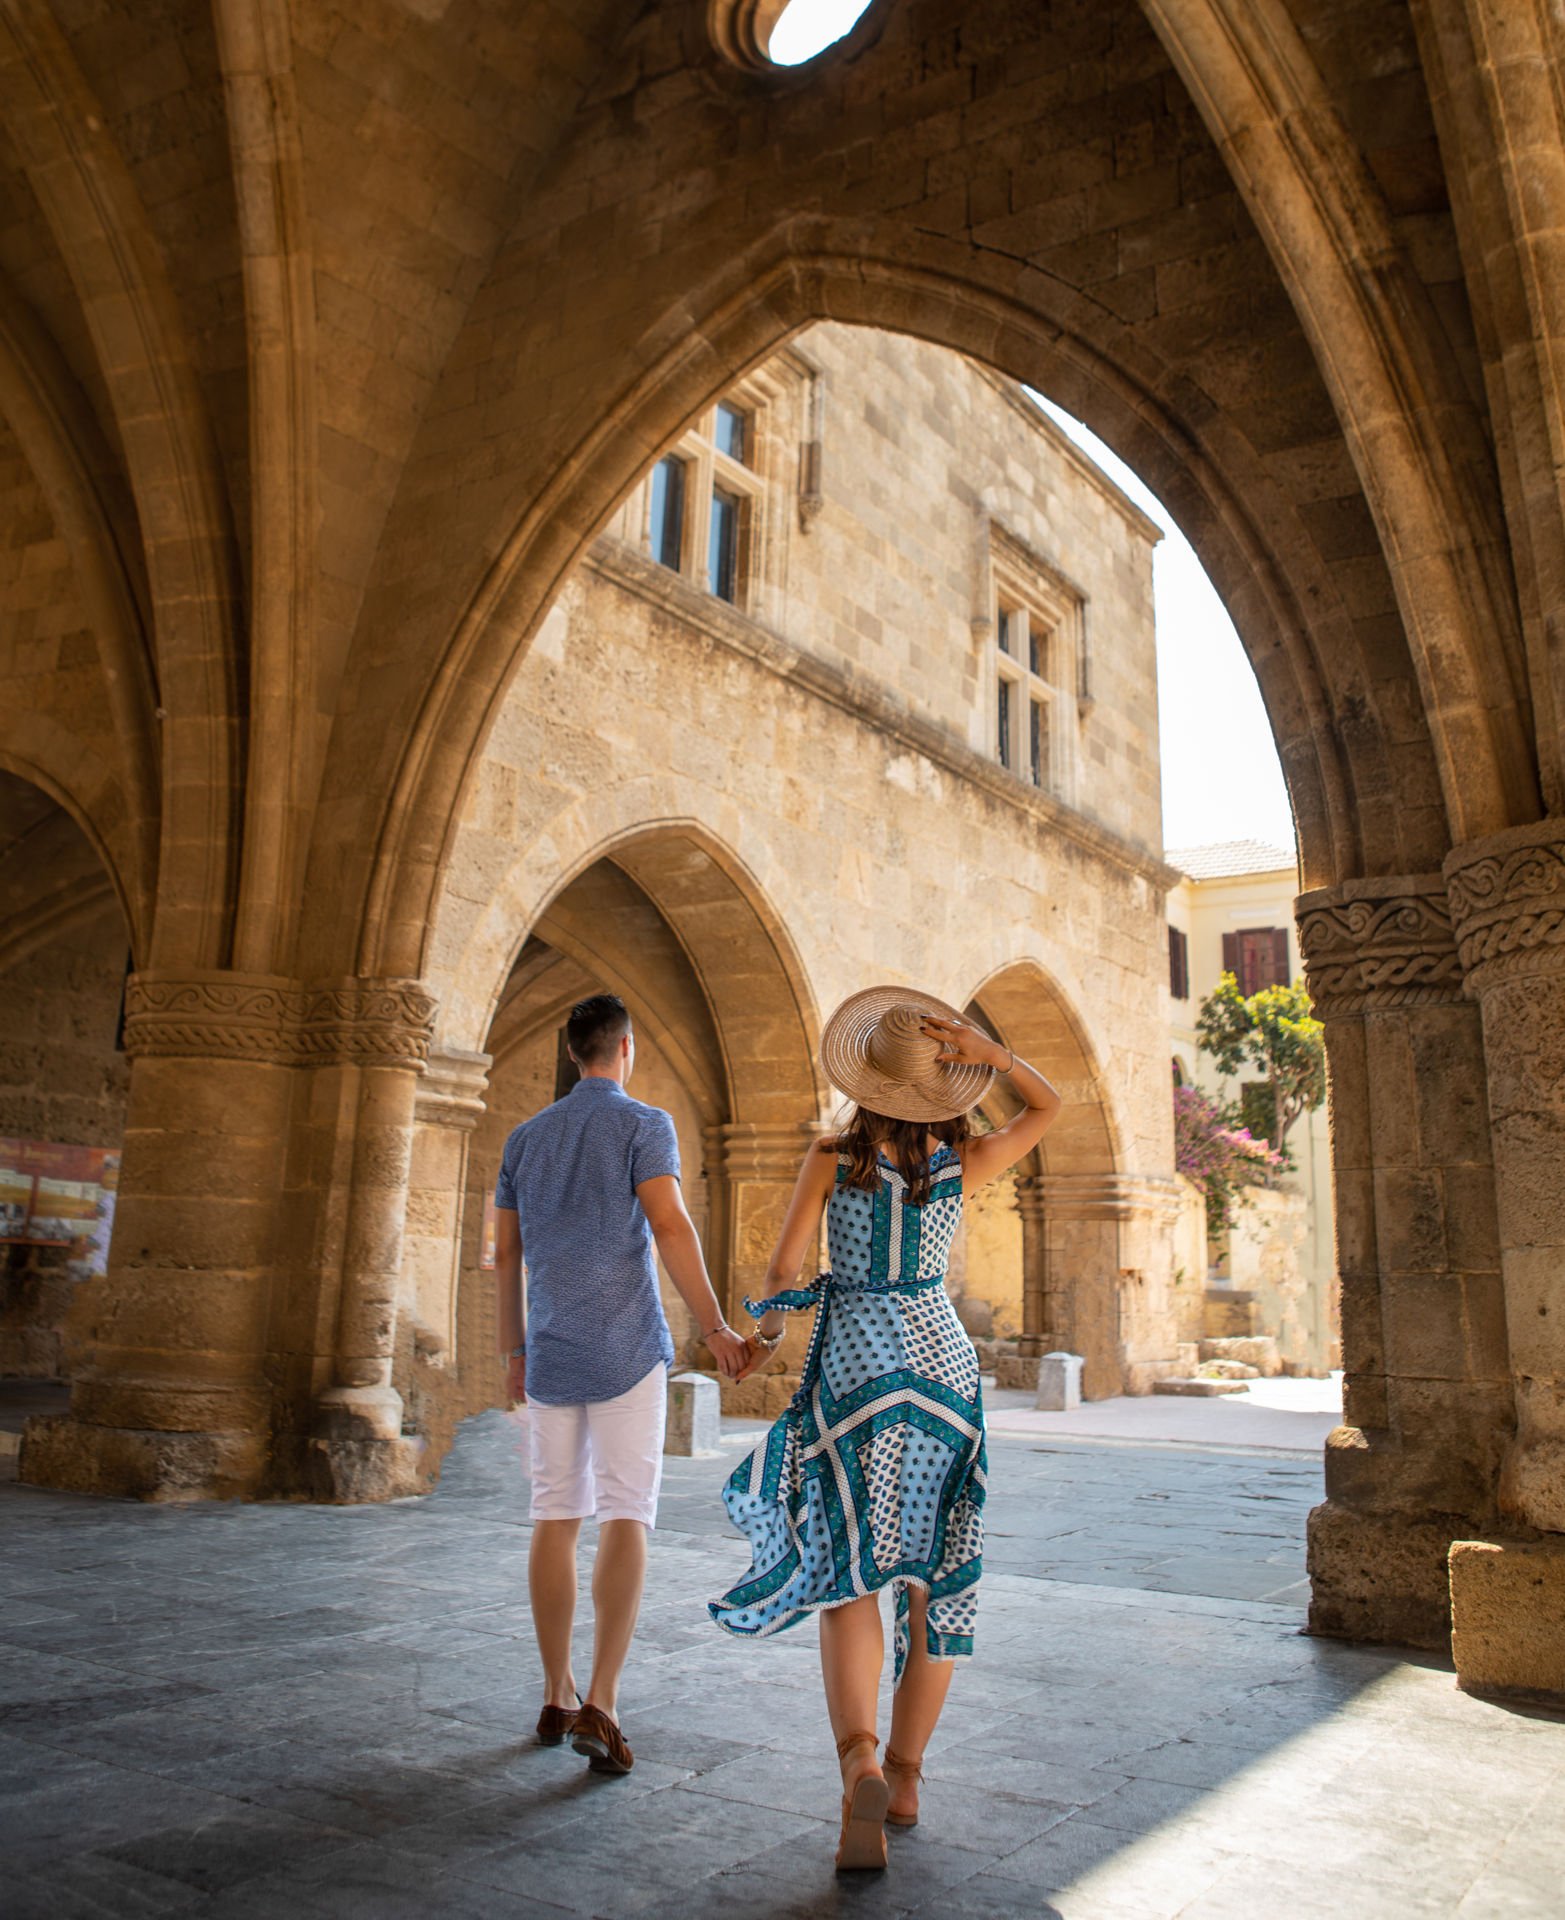 Rhodes old Town, UNESCO World Heritage site